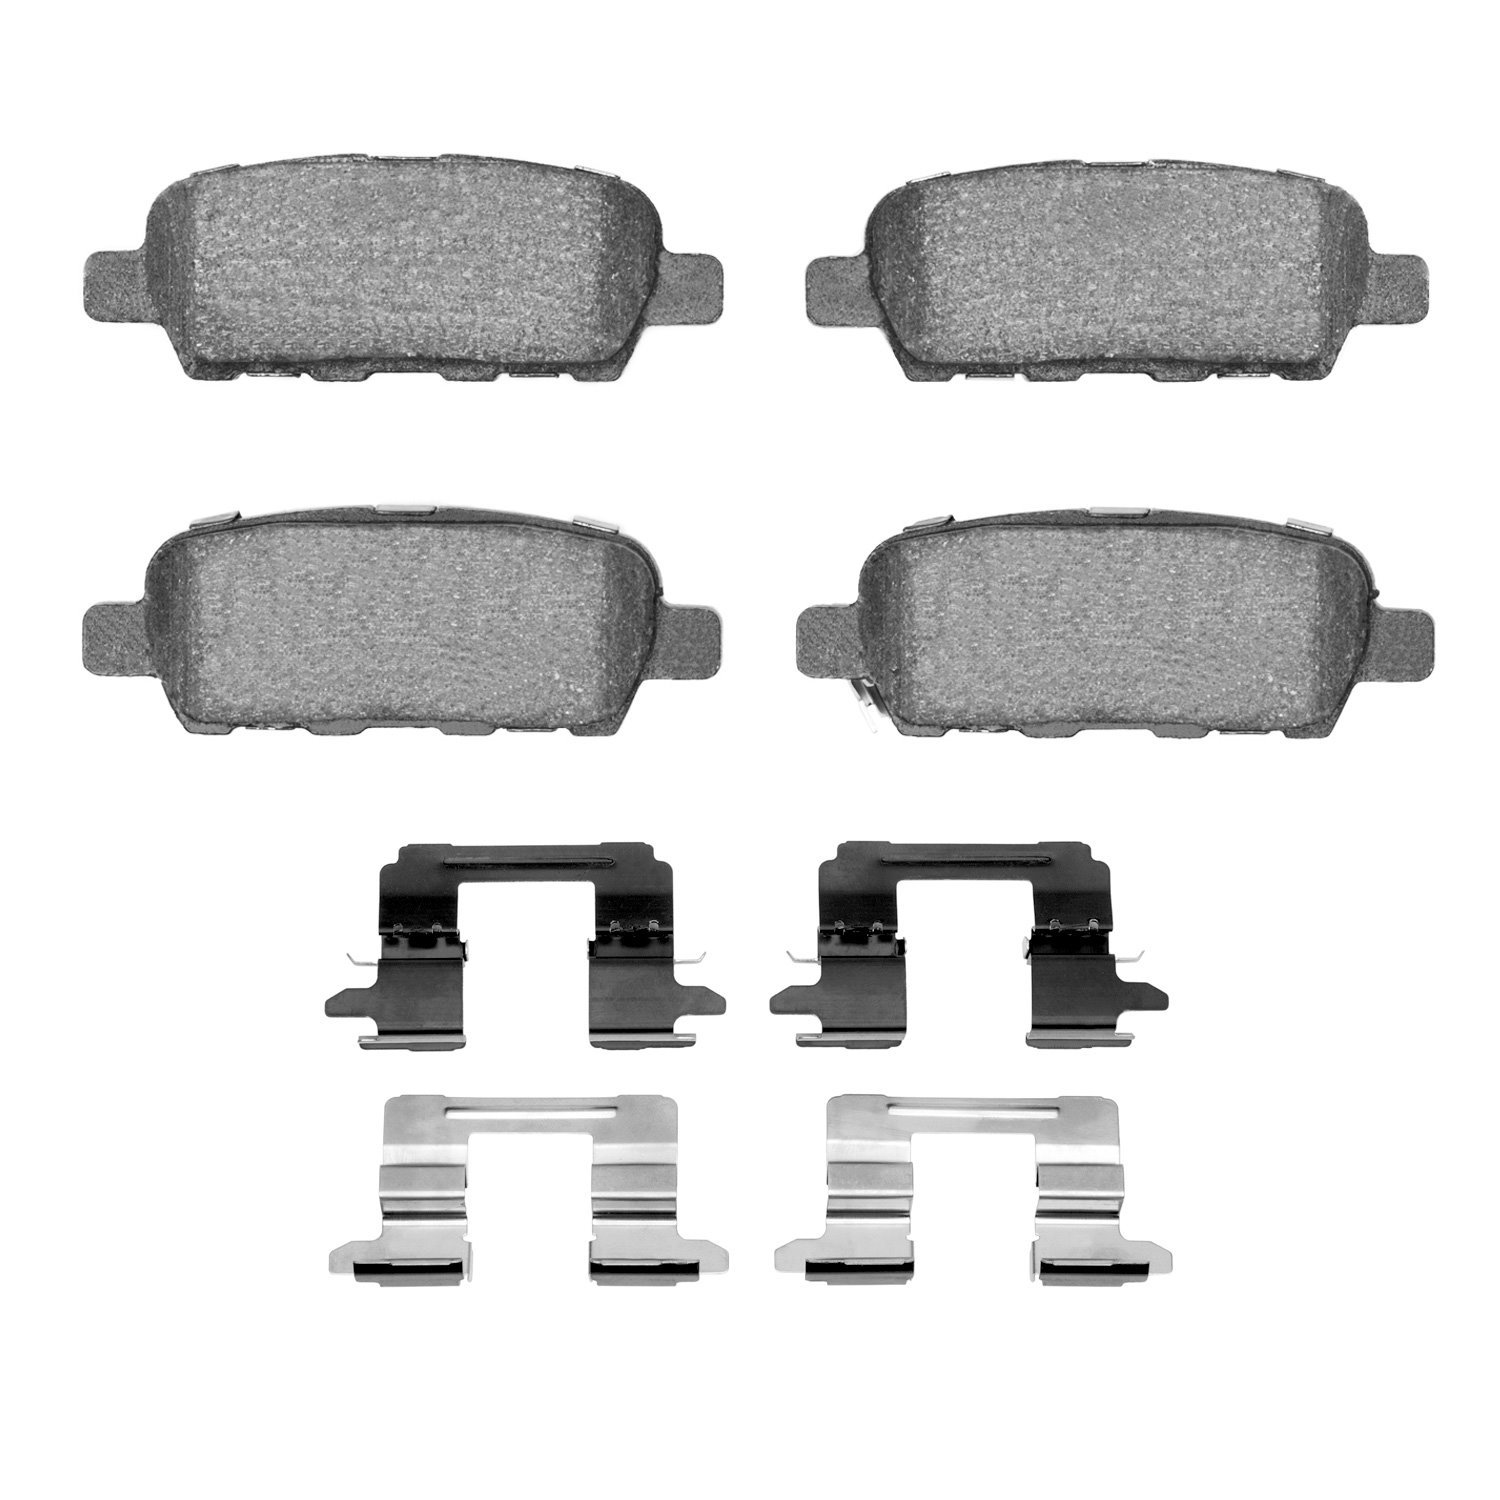 1600-0905-03 5000 Euro Ceramic Brake Pads & Hardware Kit, Fits Select Multiple Makes/Models, Position: Rear